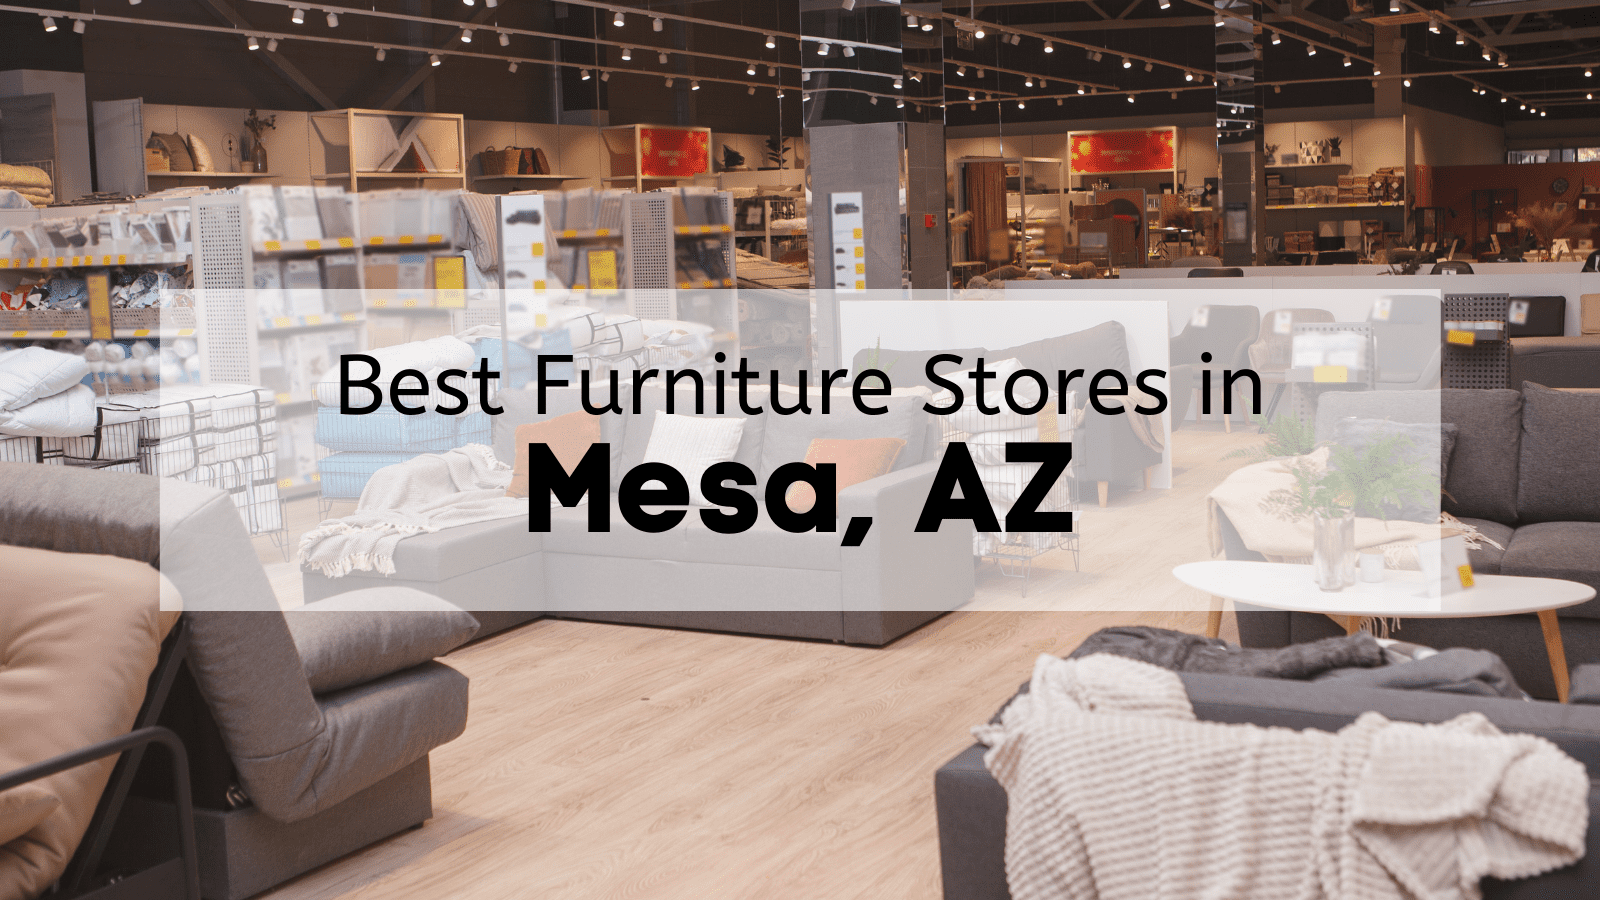 Mesa, AZ furniture stores